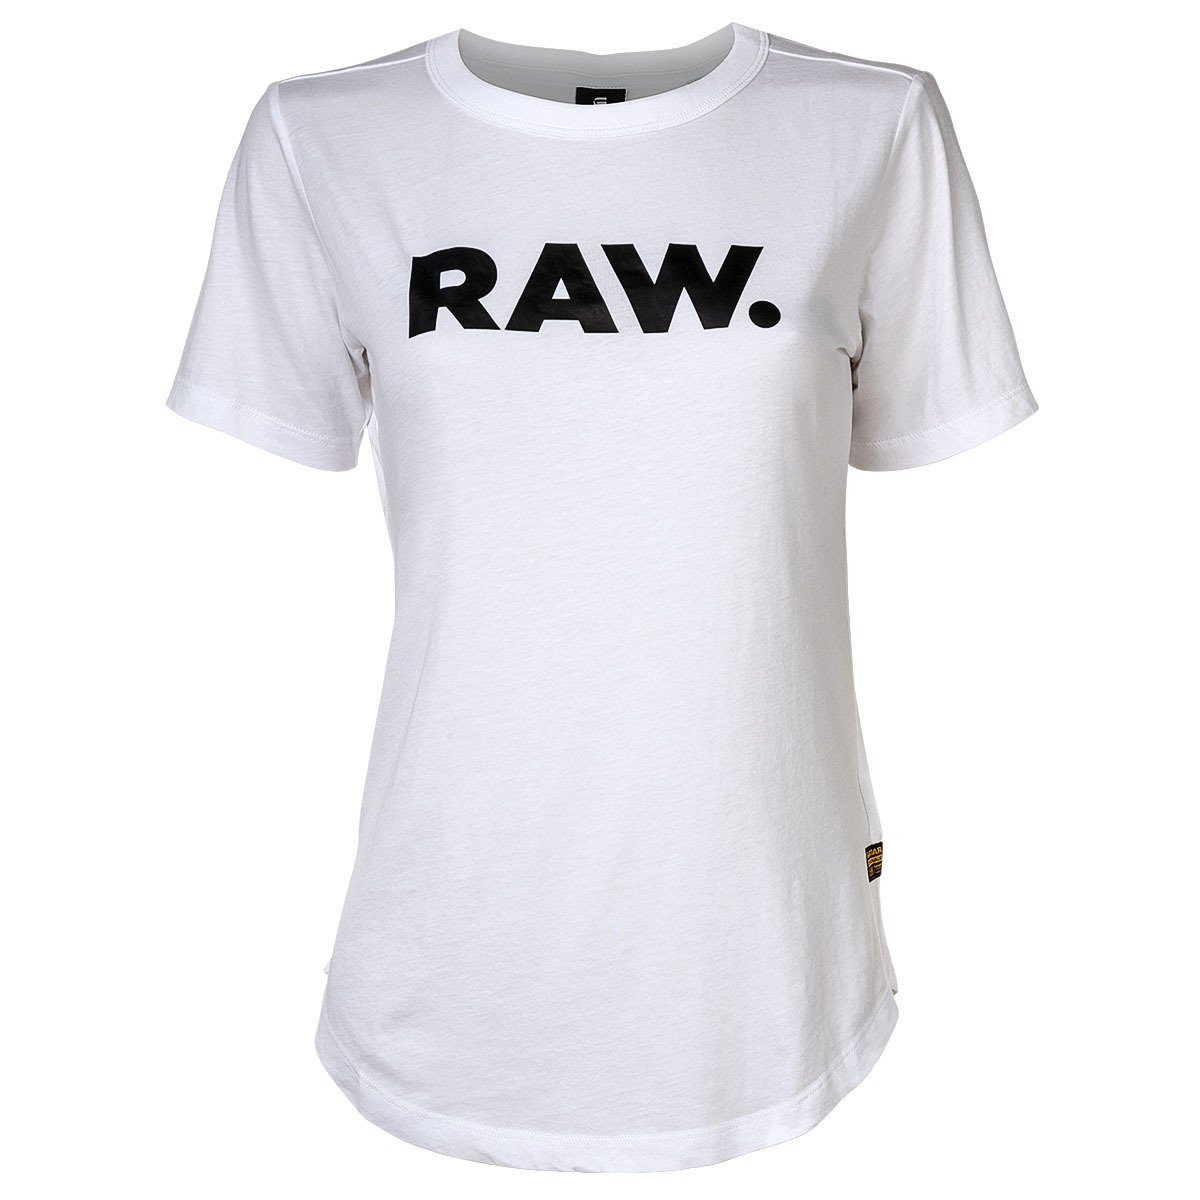 G-Star RAW T-Shirt Damen T-Shirt - RAW. slim, Rundhals, Kurzarm Weiß